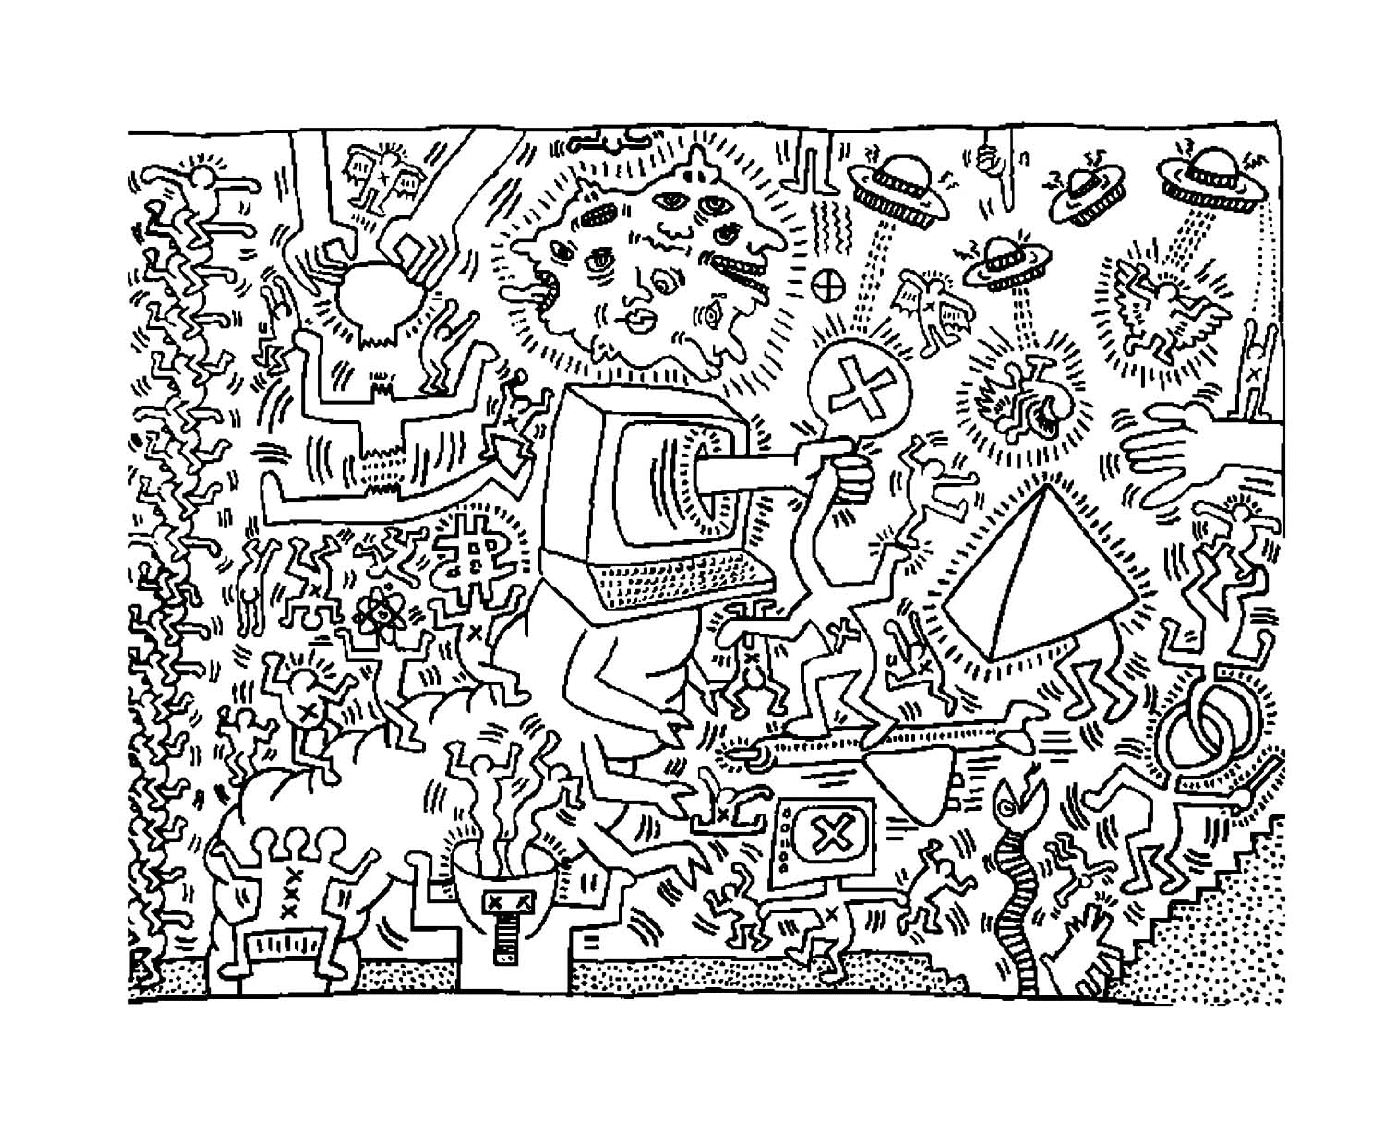   un ordinateur selon Keith Haring 